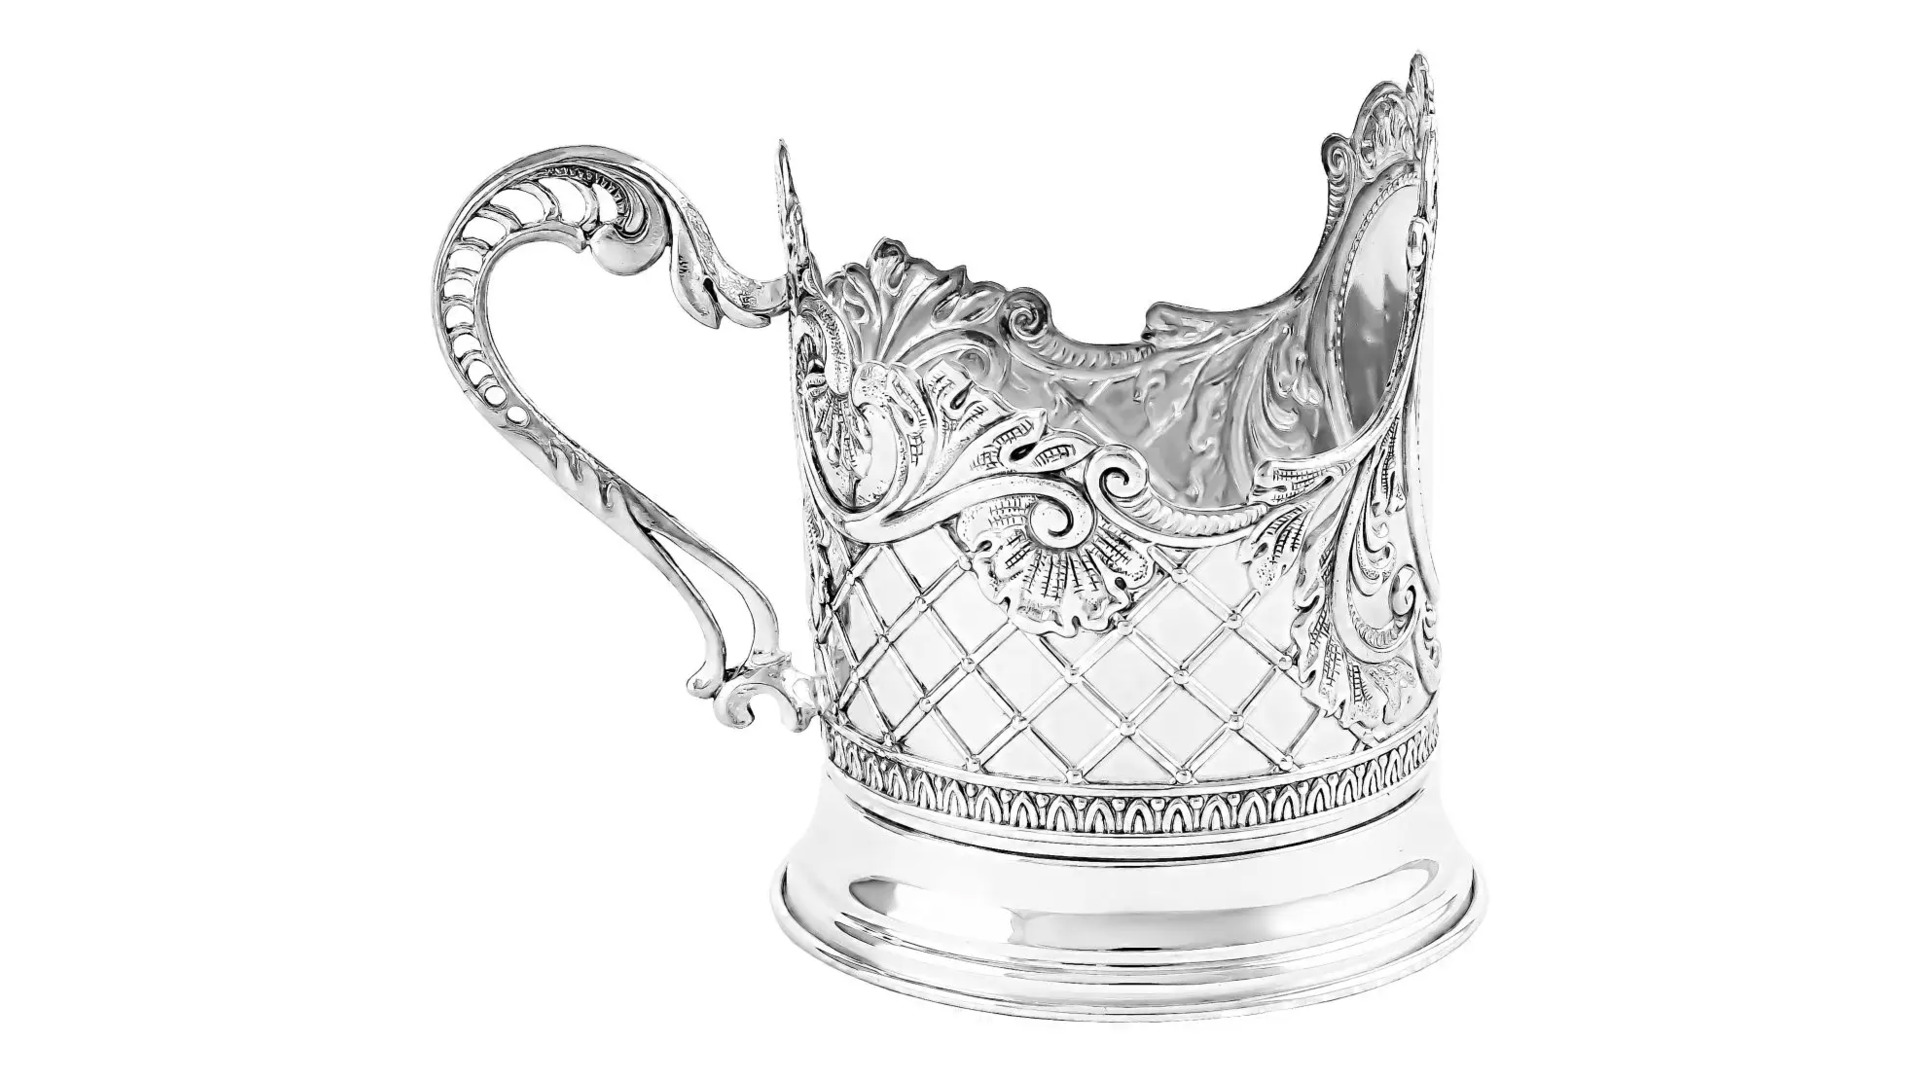 Набор чайный в футляре АргентА Classic Барокко 122,92 г, 3 предмета, серебро 925